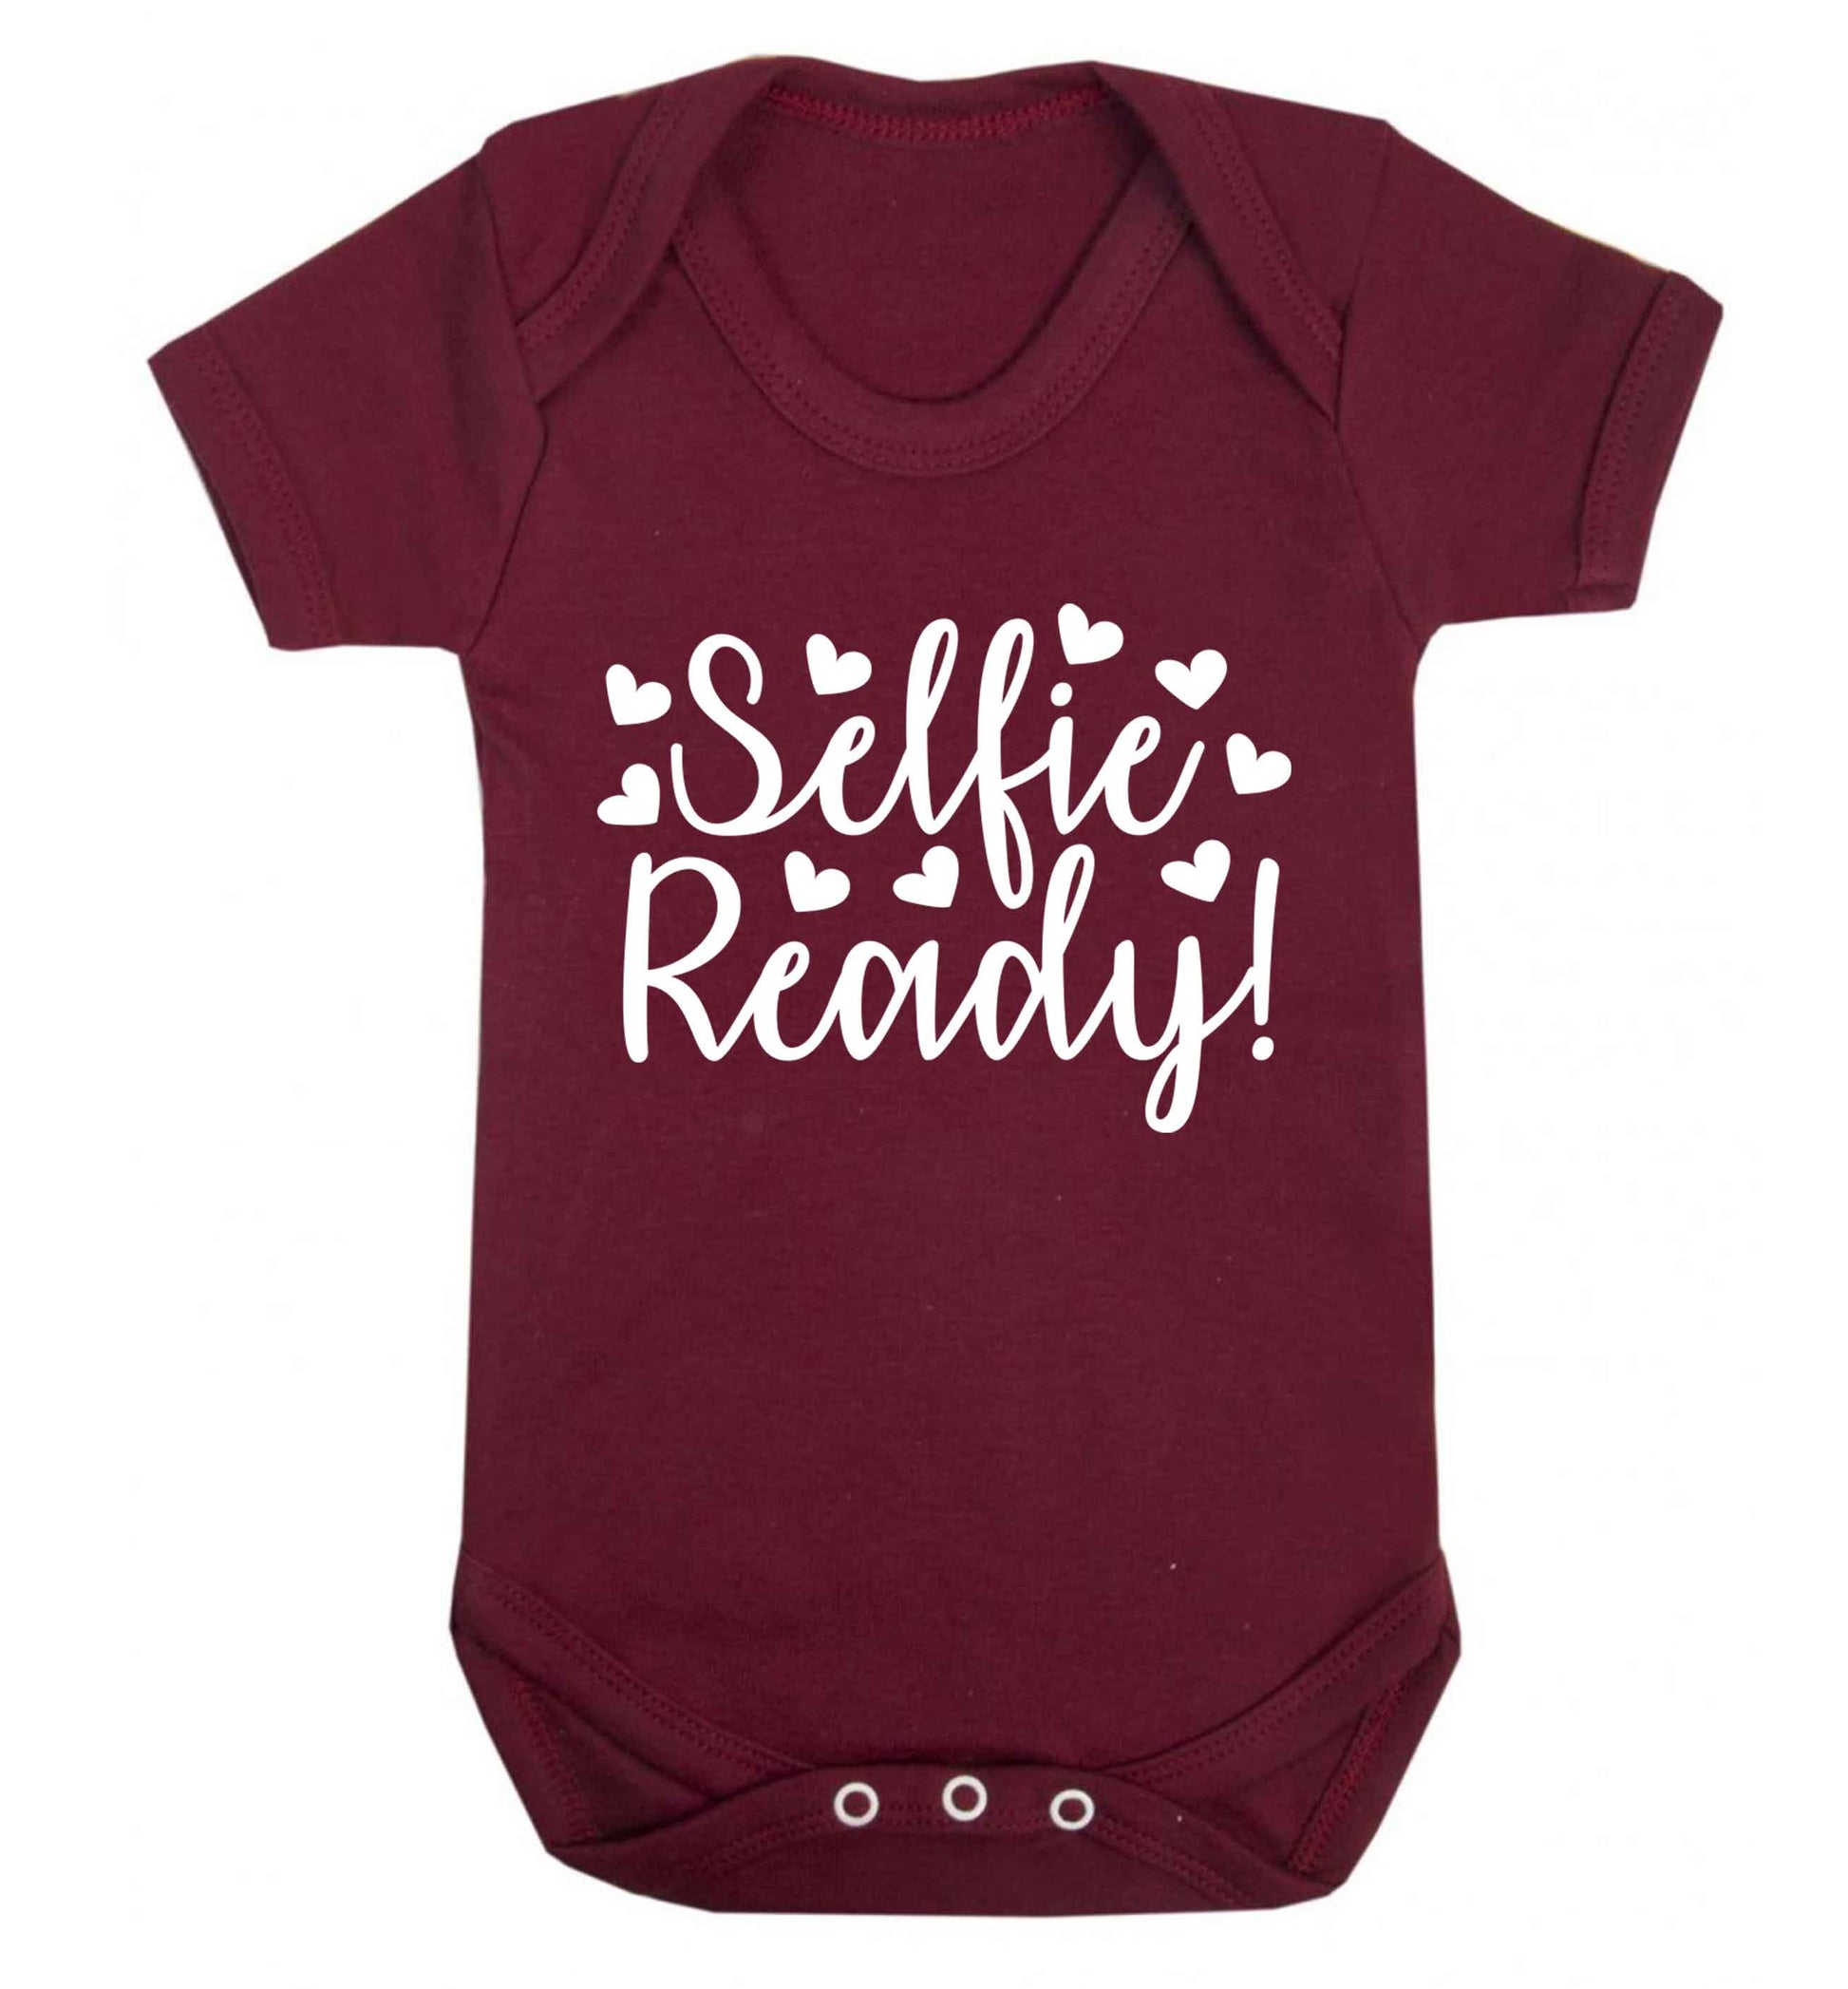 Selfie ready Baby Vest maroon 18-24 months